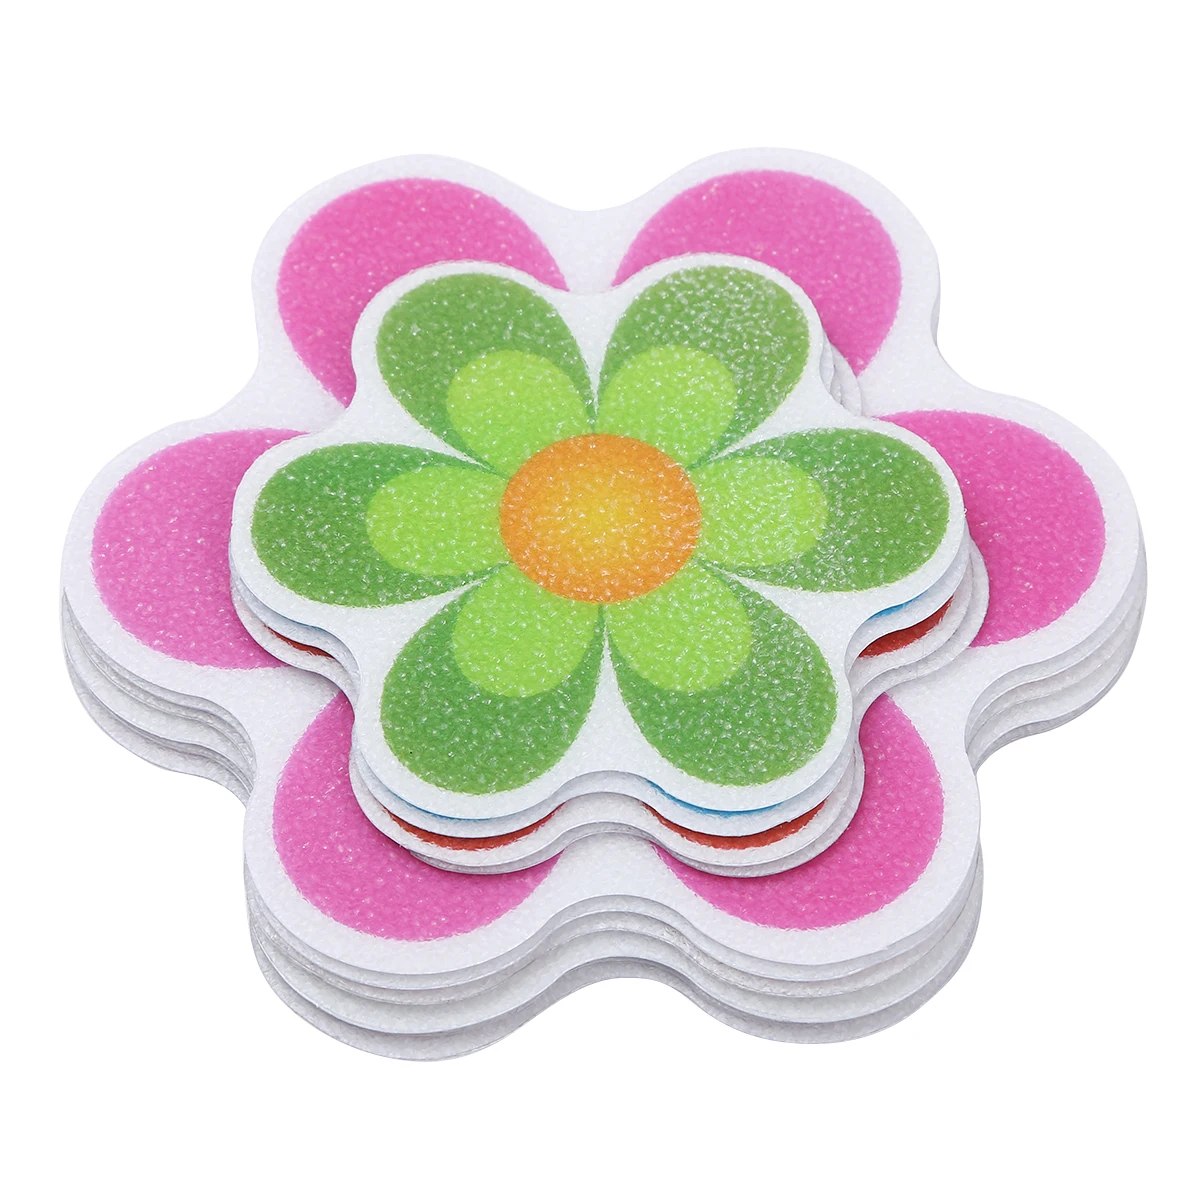 20PCS Flower Anti-slip Safety Treads Applique Stickers Decals Tub Mat Decals Mat 